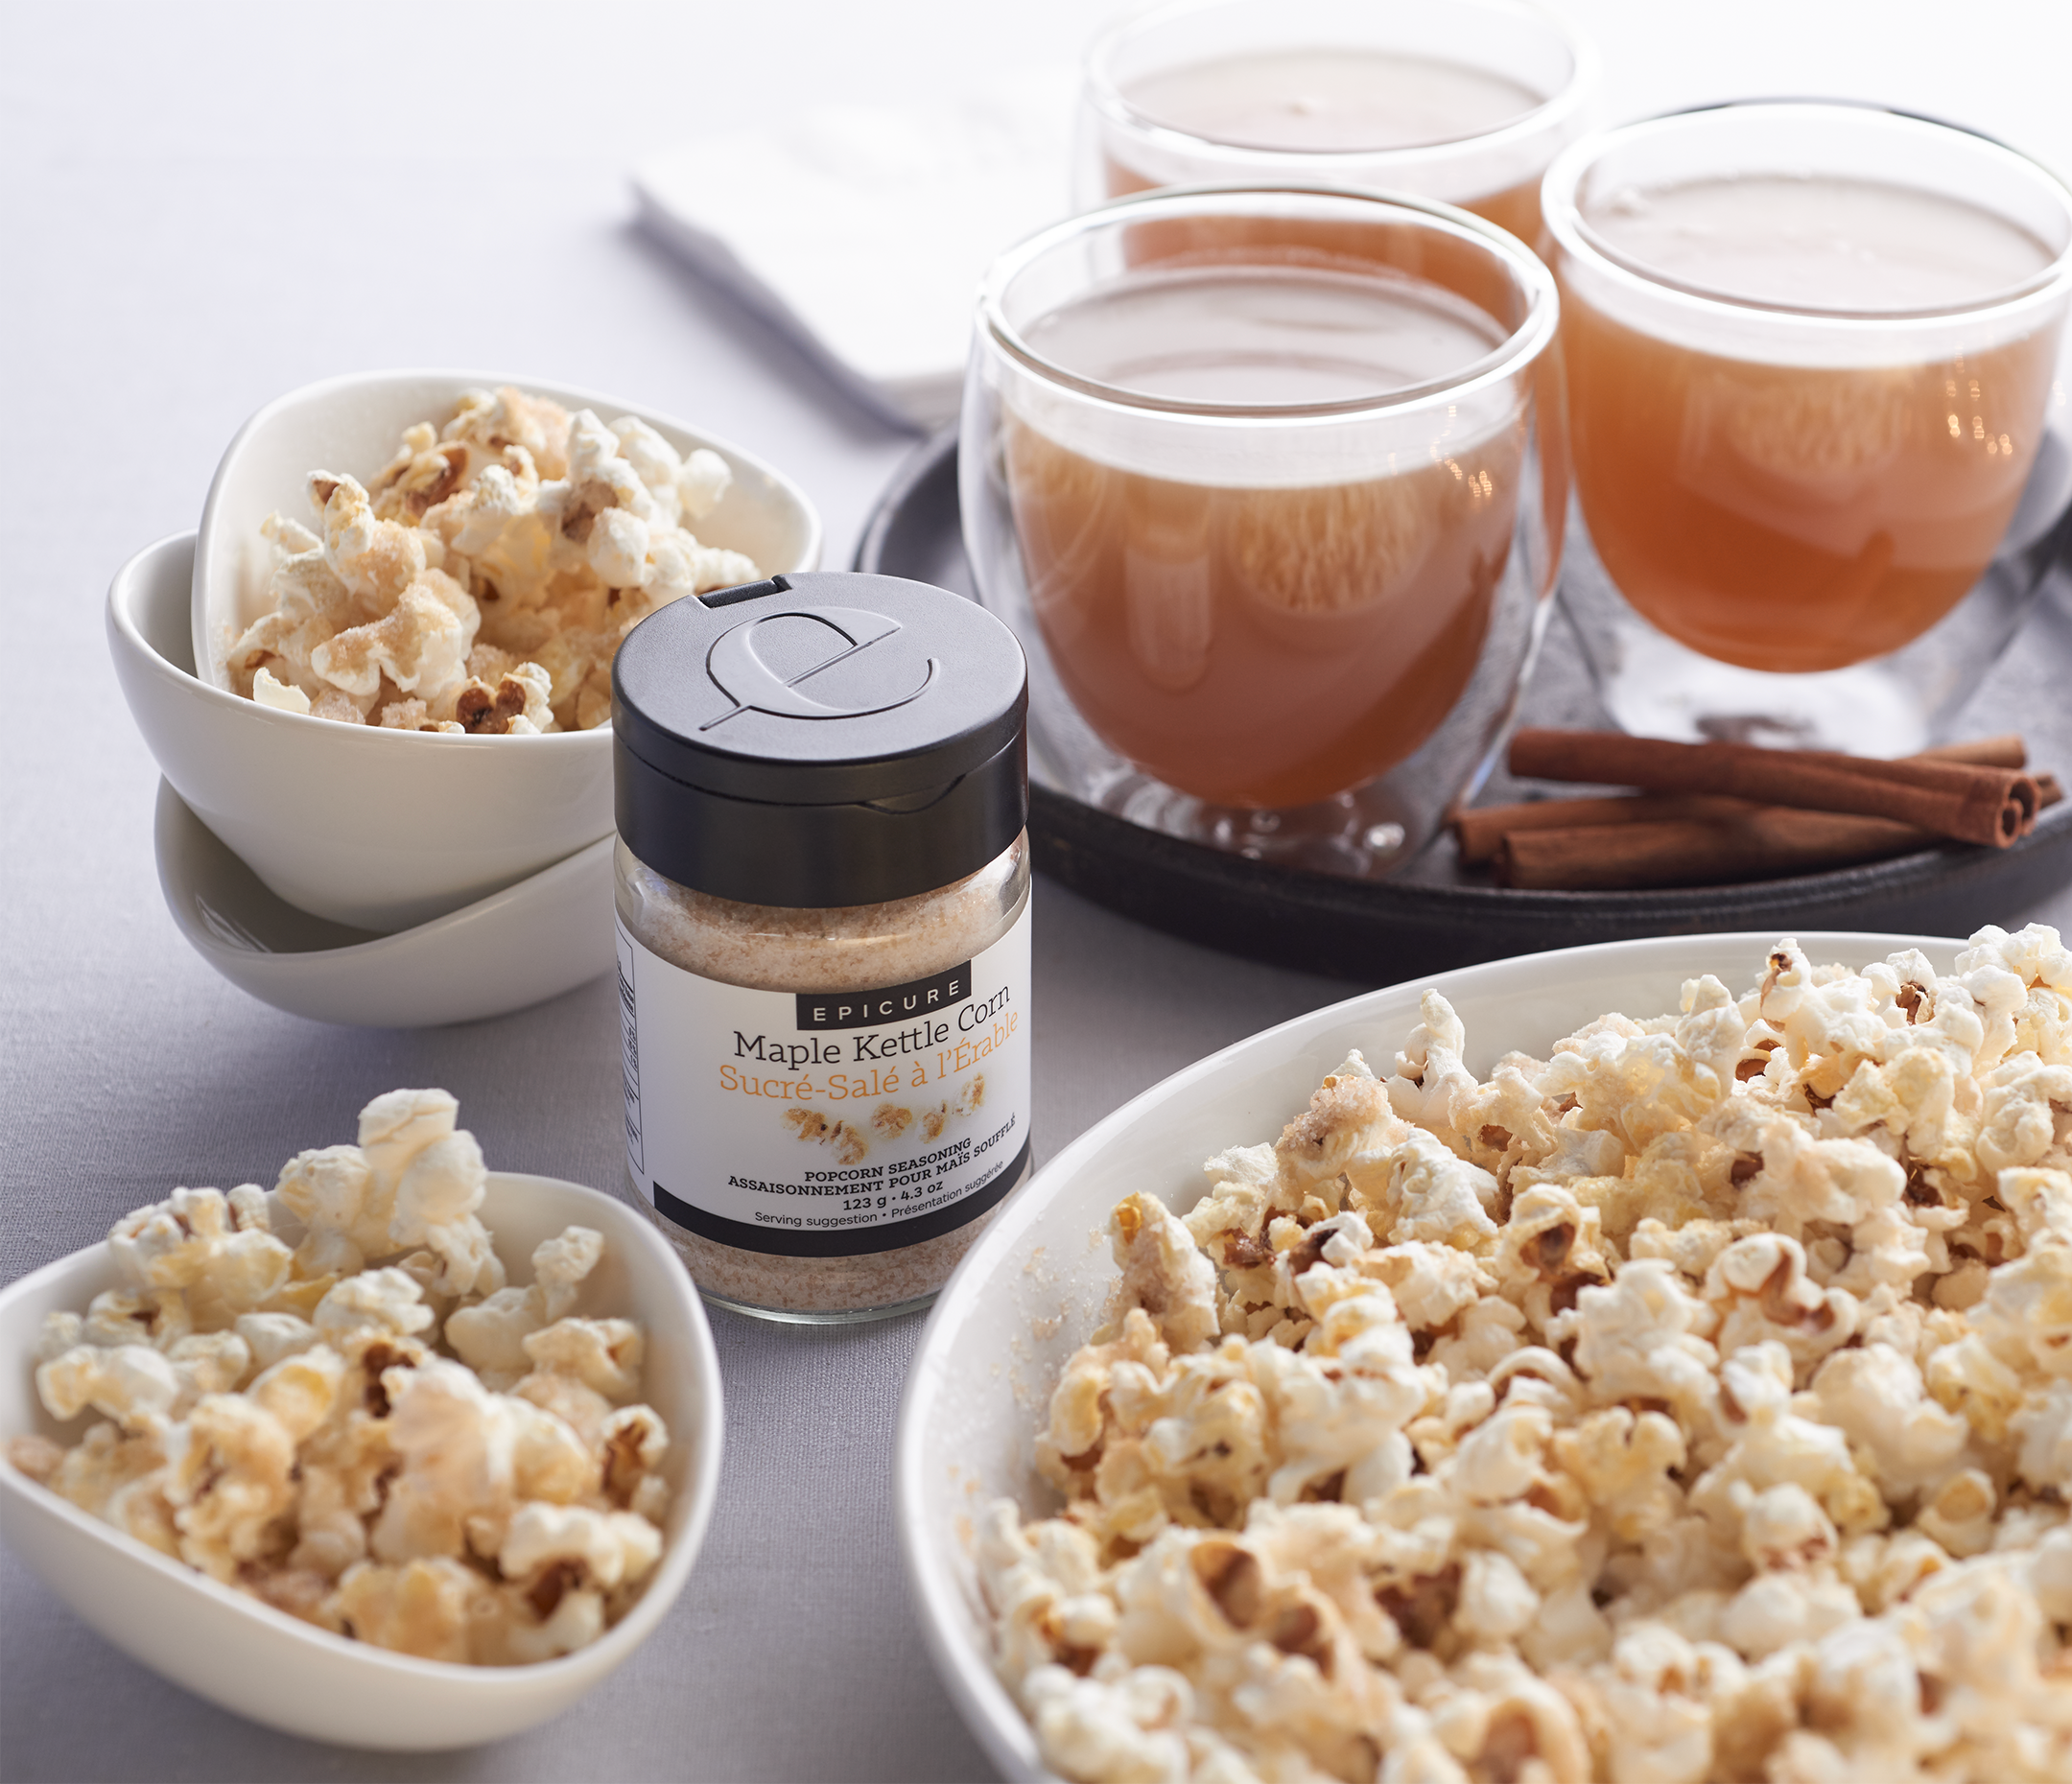 Maple Kettle Corn Popcorn Seasoning